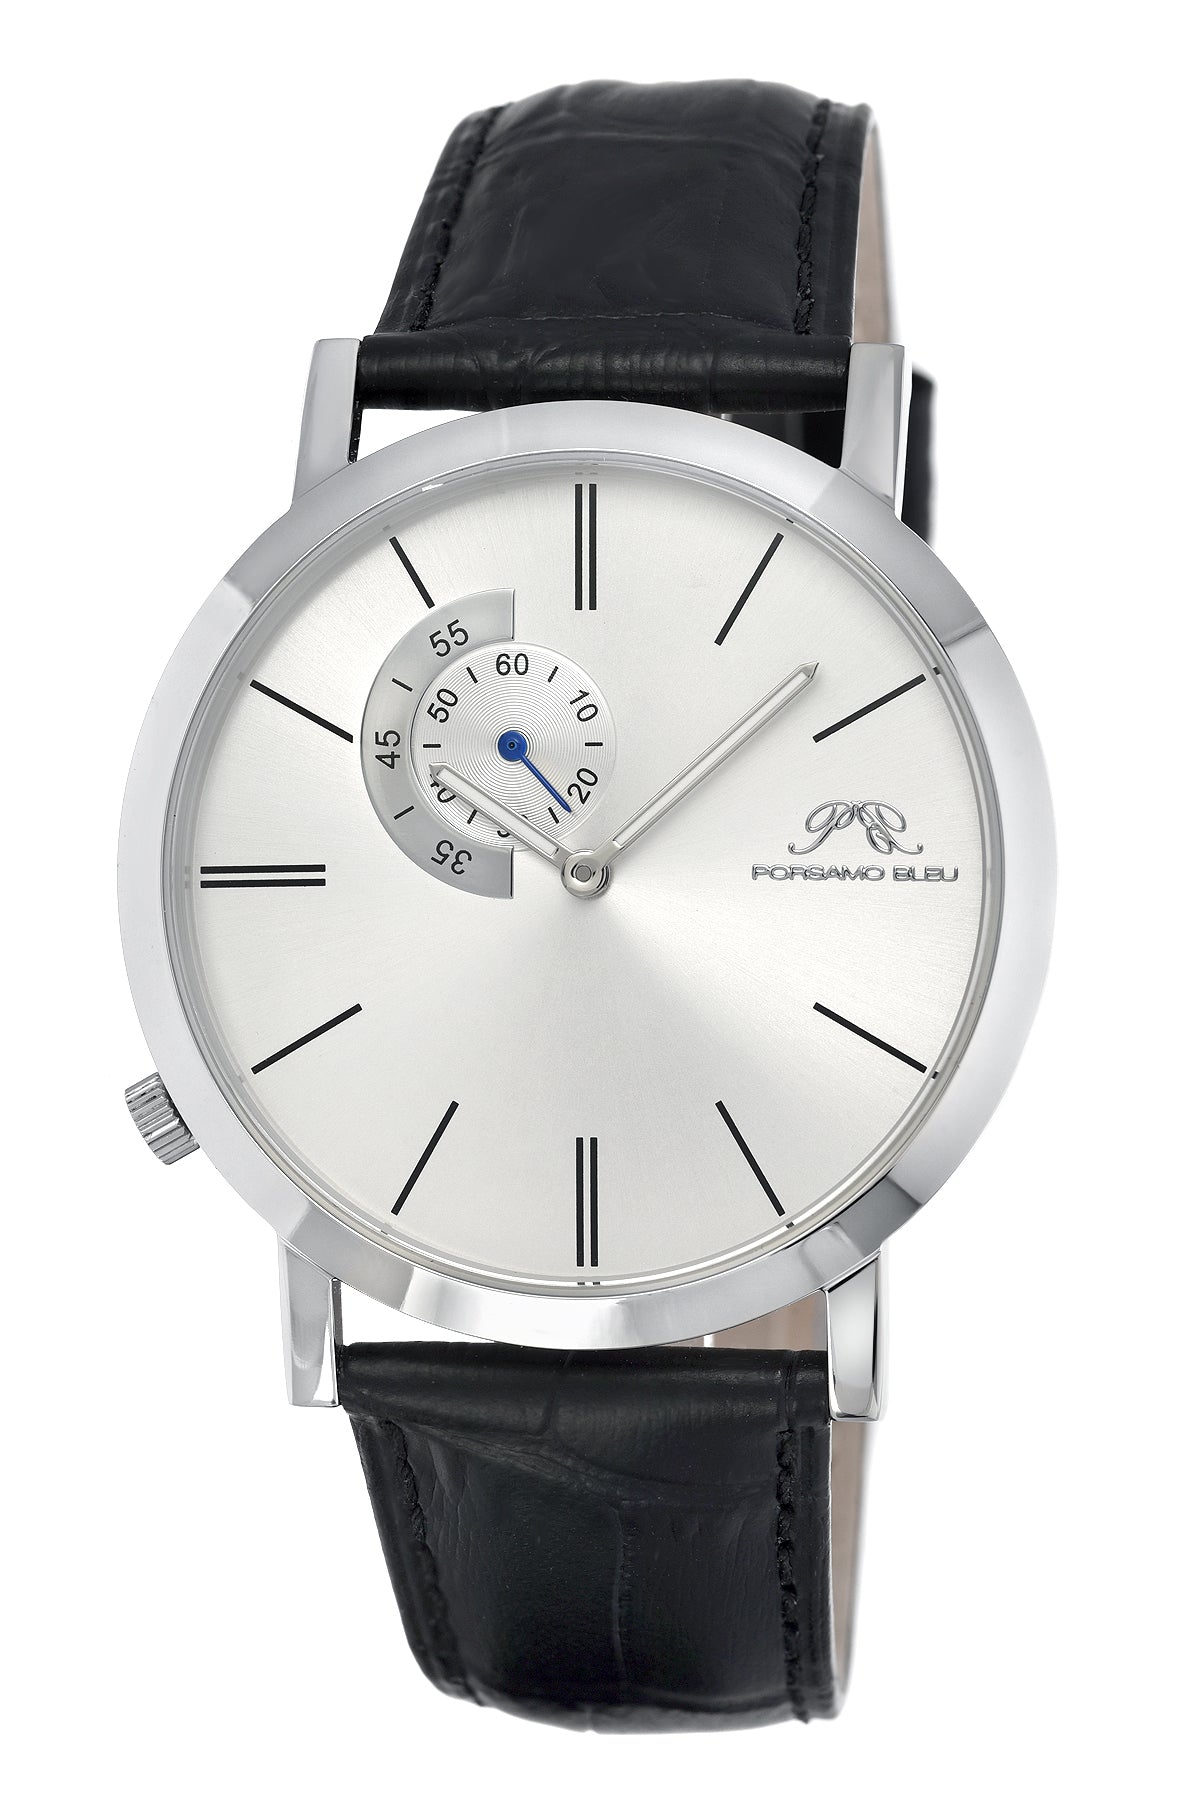 Porsamo Bleu Parker luxury men's watch, genuine leather band, silver, black 831APAL